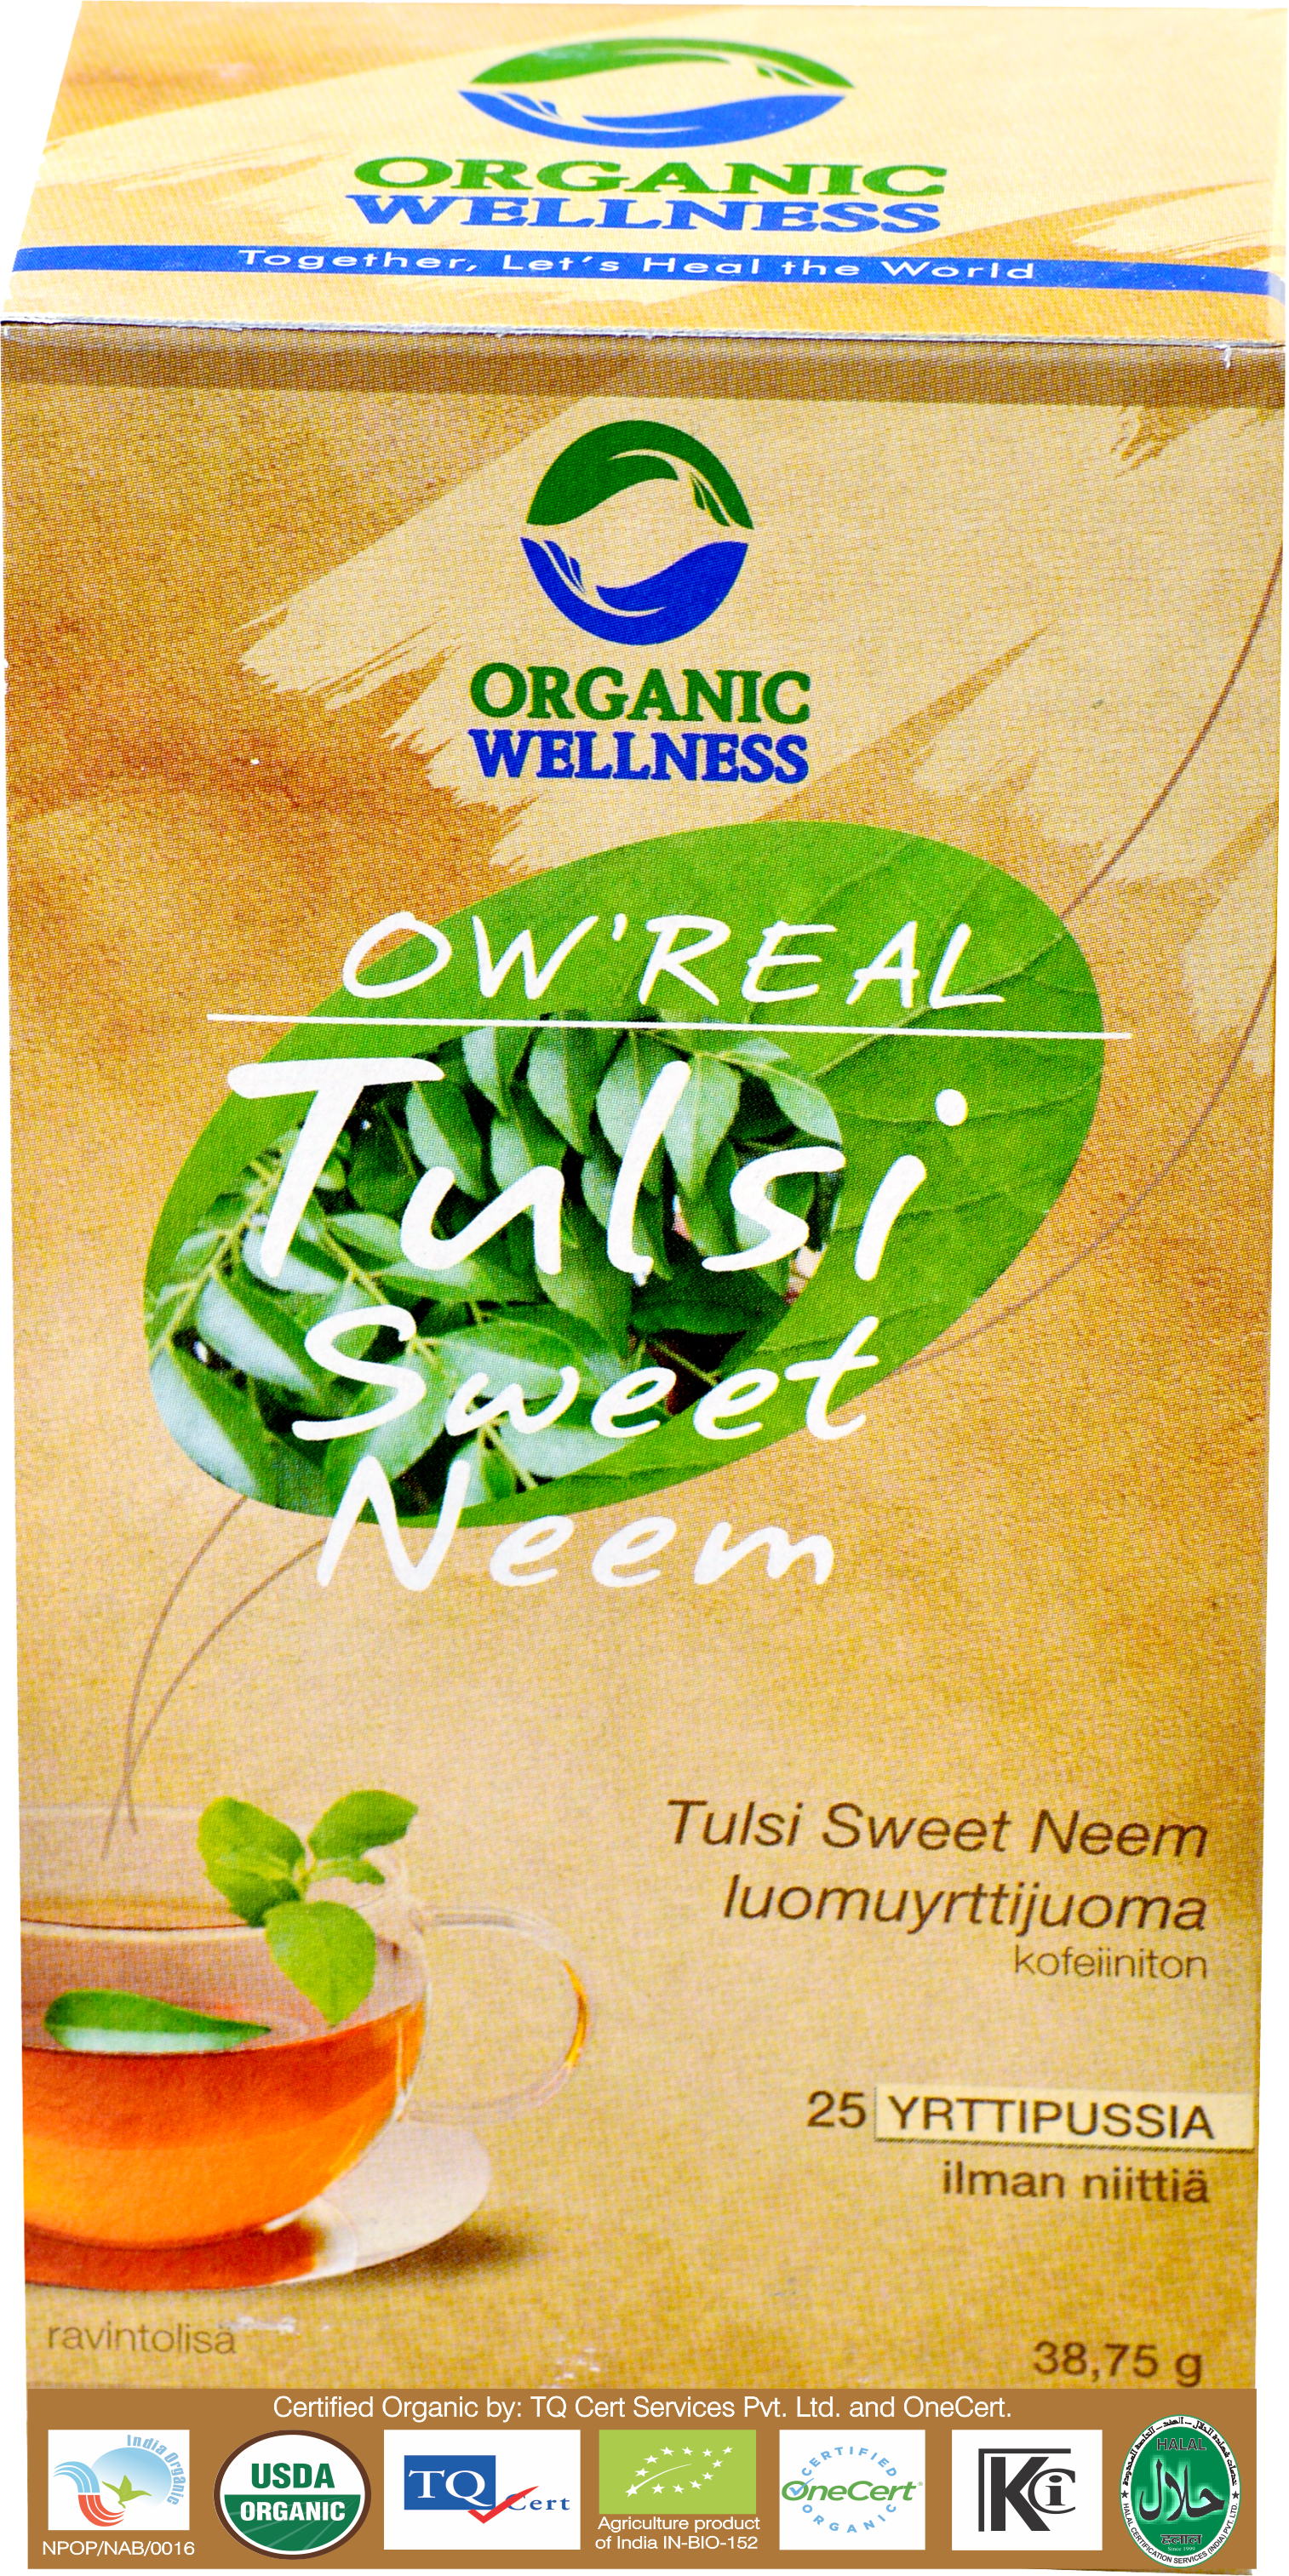 Buy Organic Wellness Real Sweet Neem Tea at Best Price Online